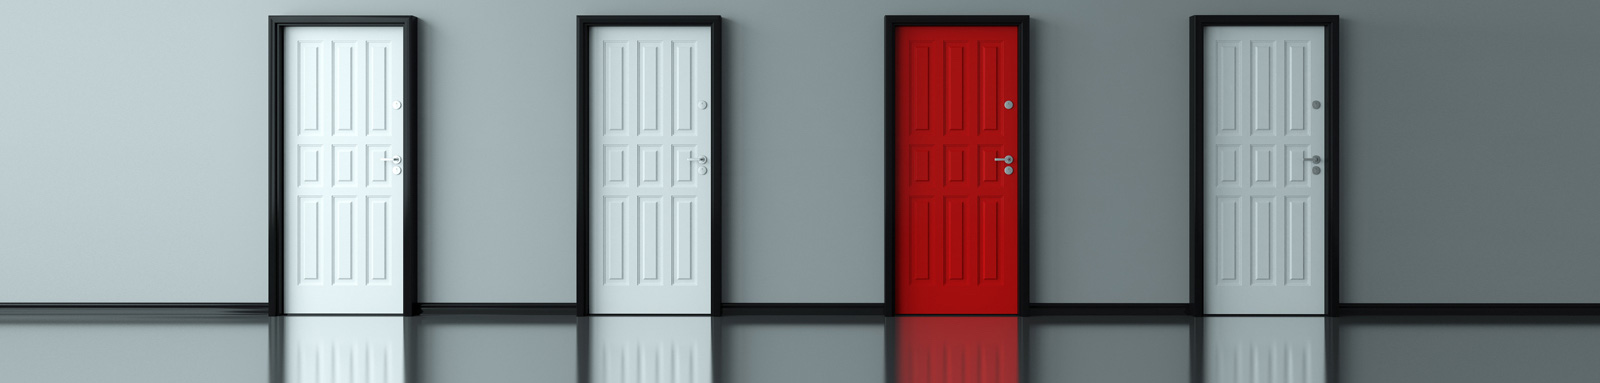 Red door and three white doors